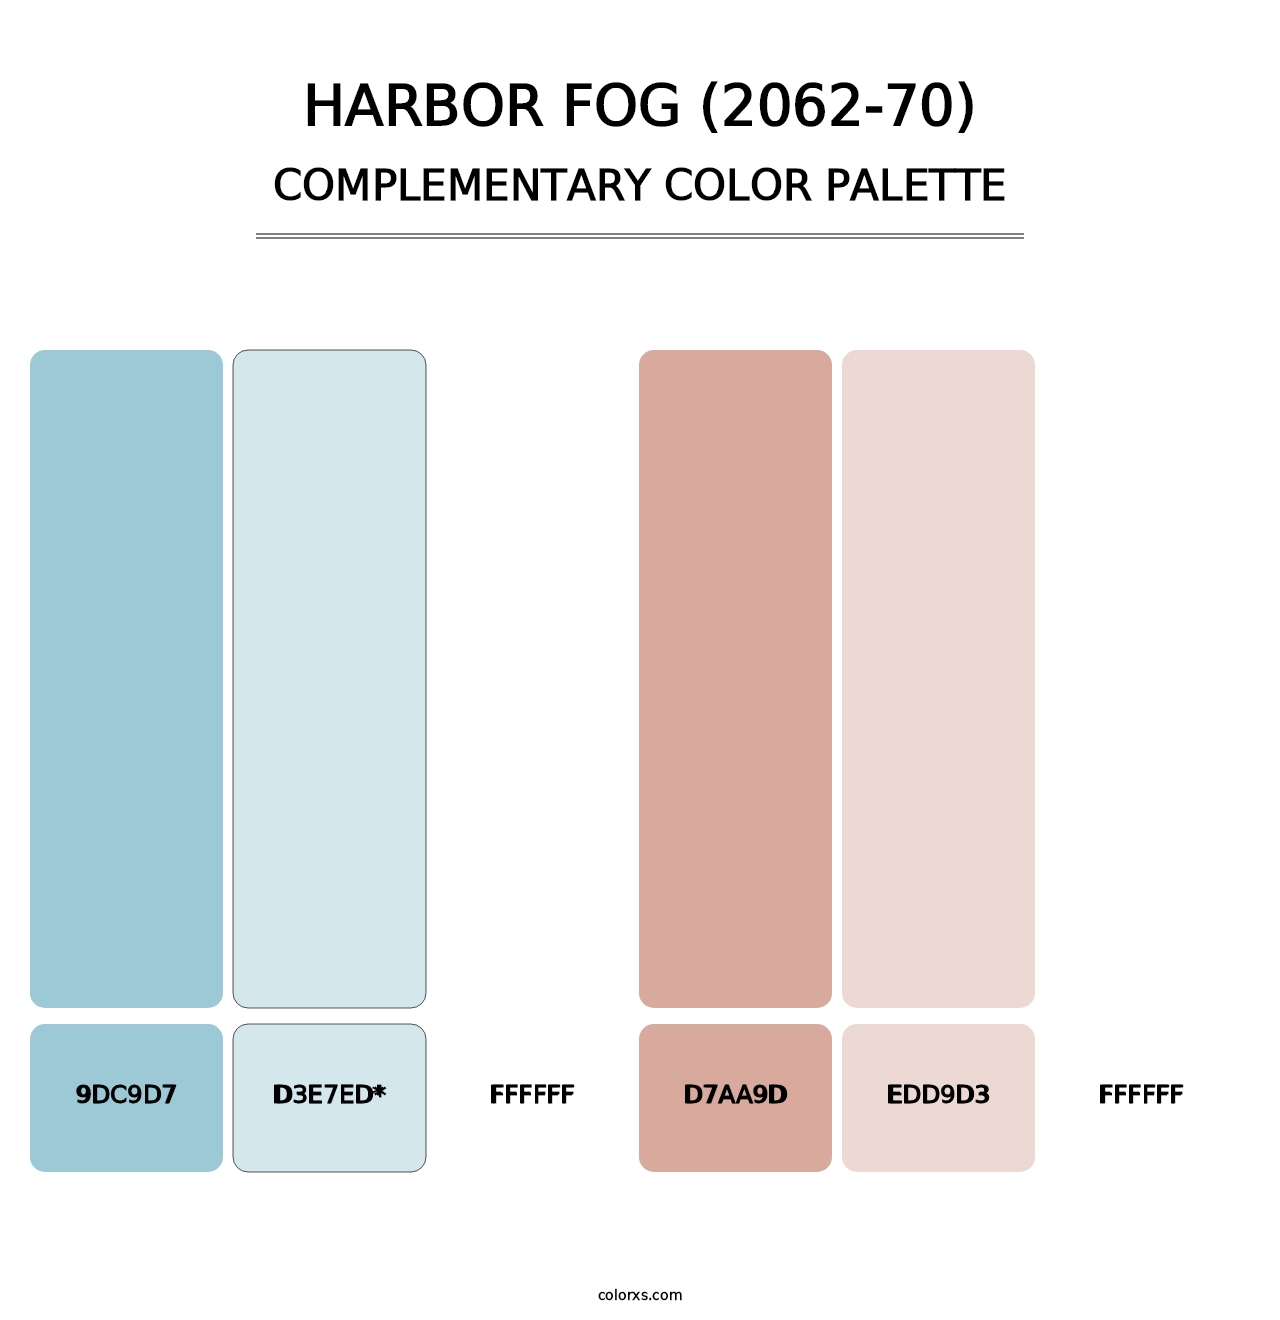 Harbor Fog (2062-70) - Complementary Color Palette